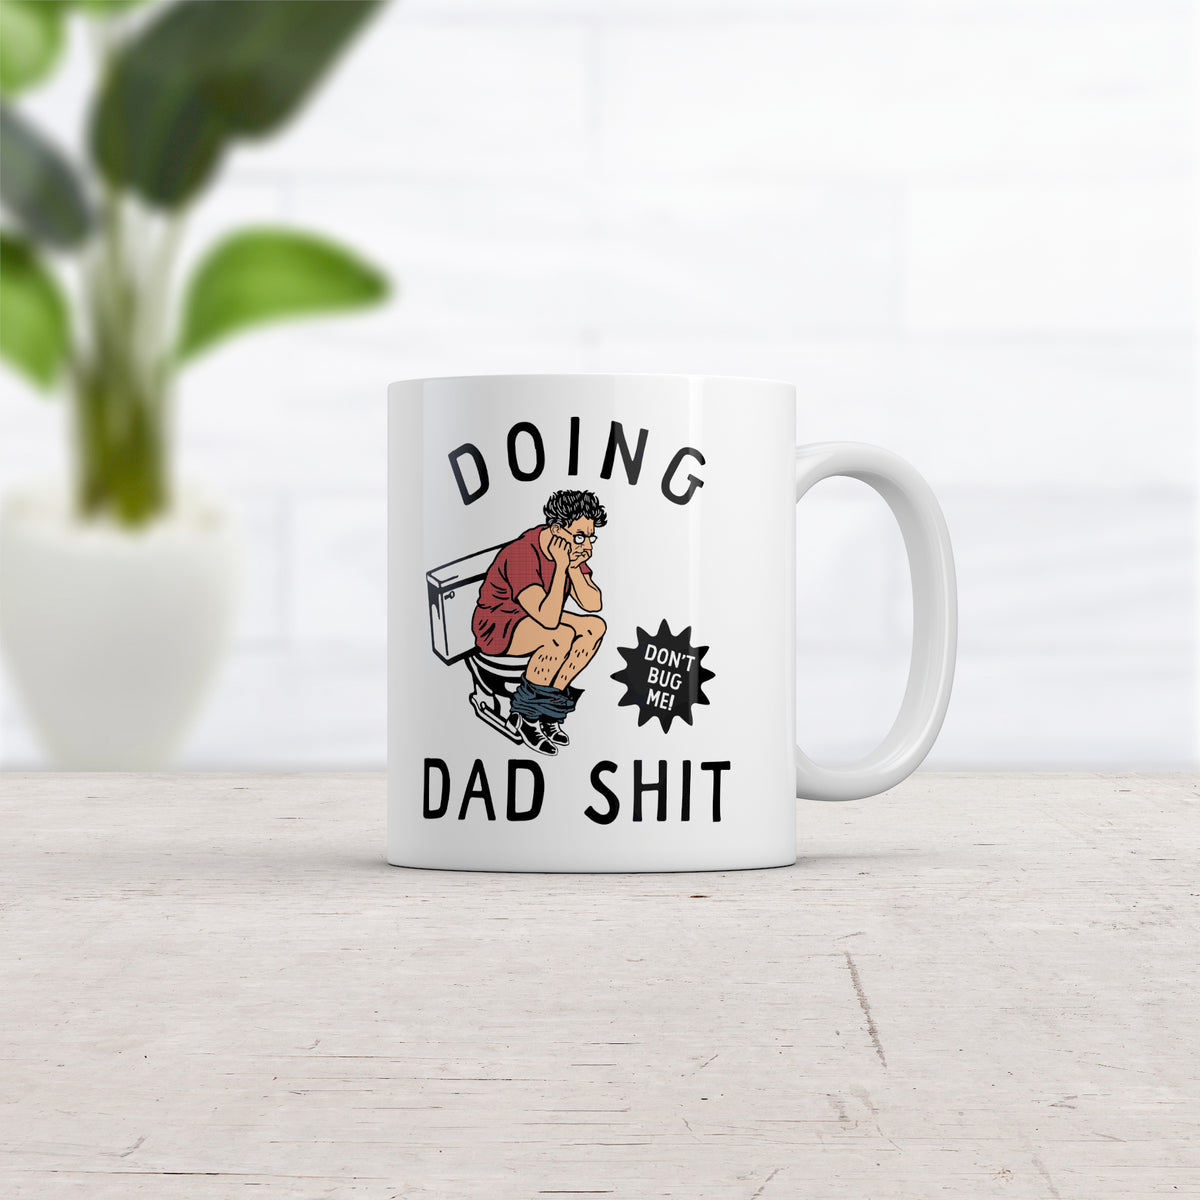 Doing Dad Shit Mug